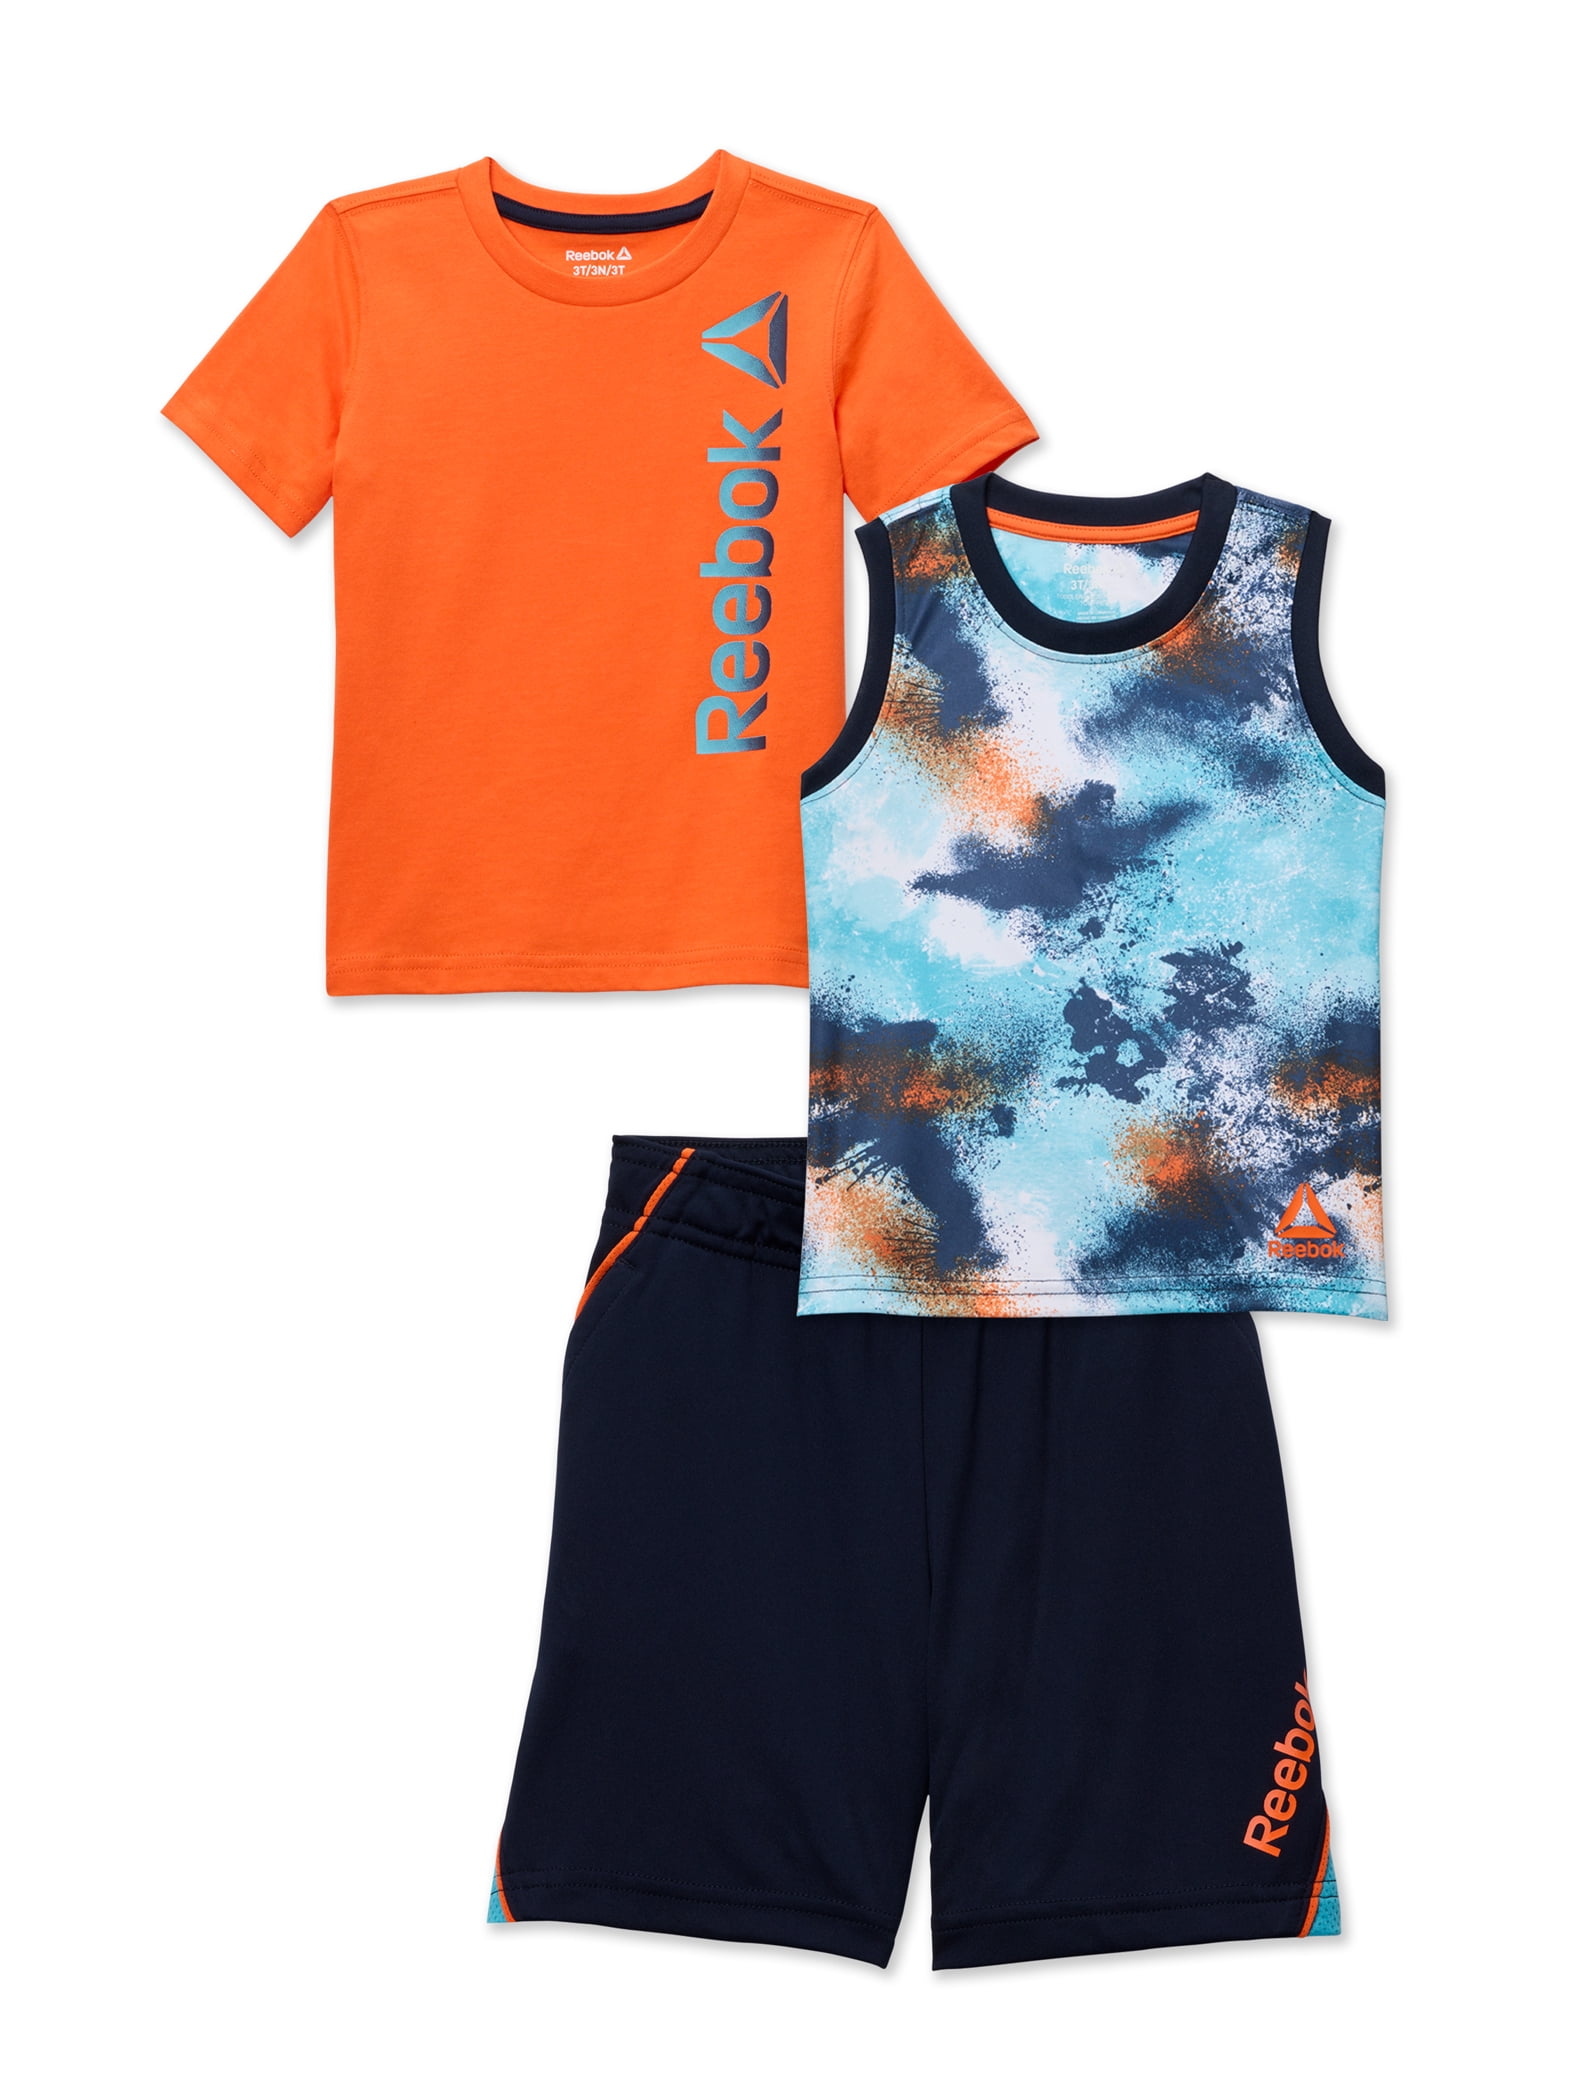 vraag naar ~ kant Vloeibaar Reebok Baby and Toddler Boy T-Shirt, Tank Top, and Shorts Outfit Set,  3-Piece, Sizes 12M-5T - Walmart.com